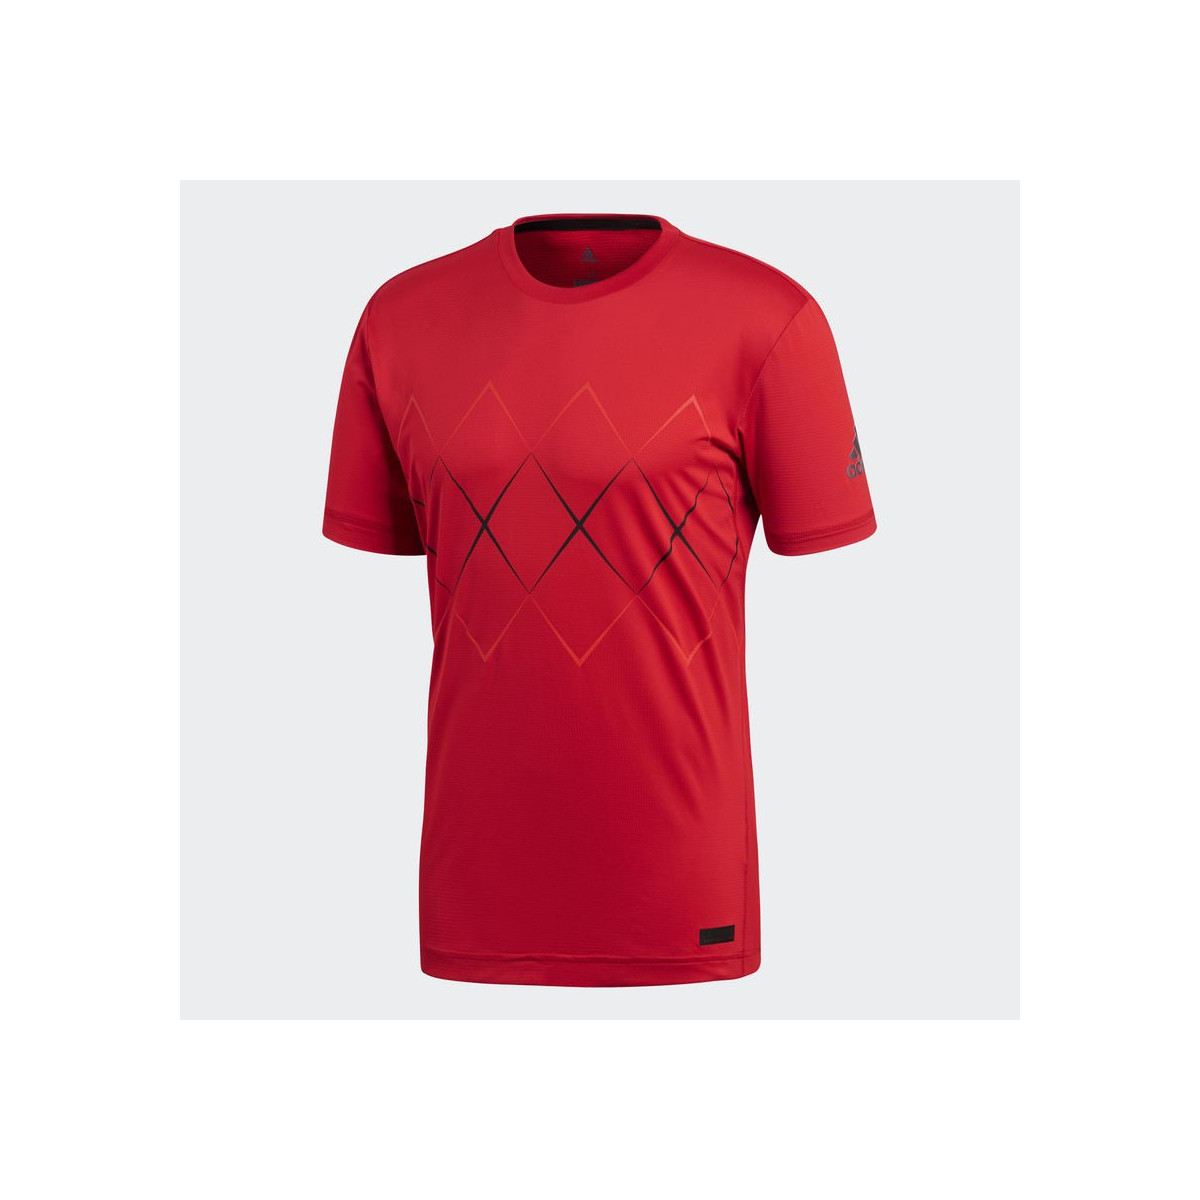 Adidas Barricade kinder-T-shirt PE18 - zwart, rood